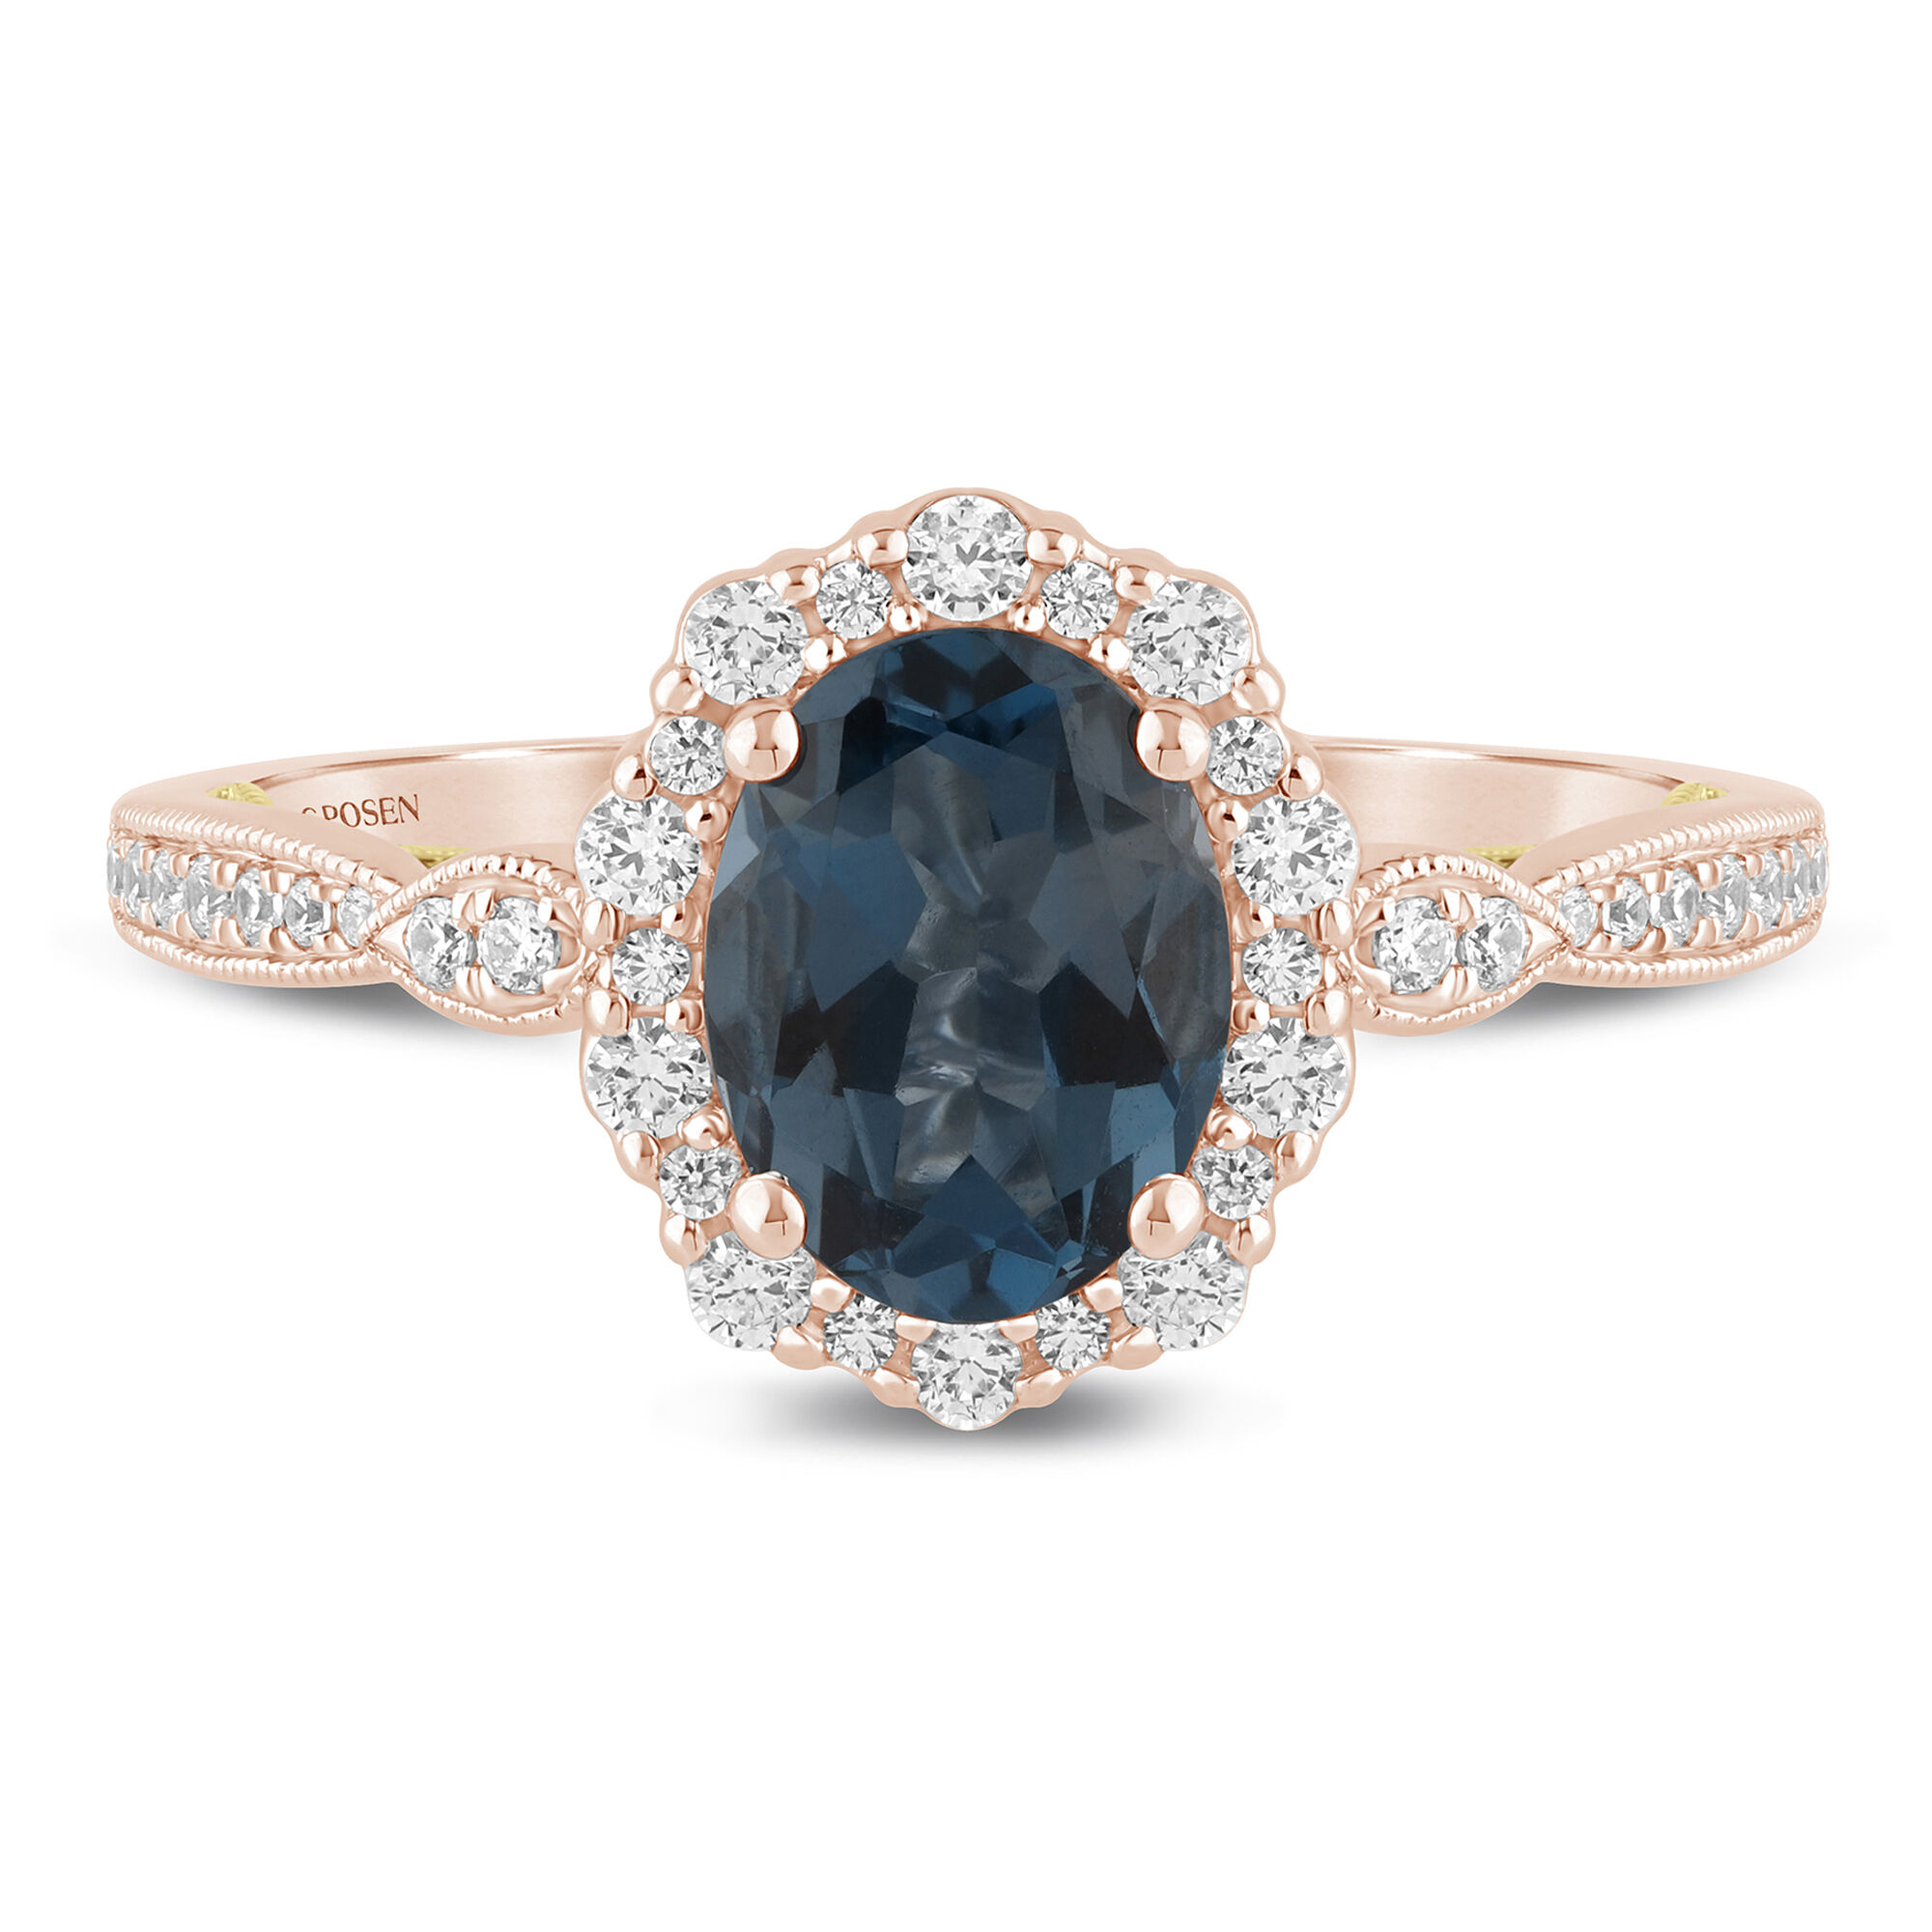 Shop Diamond Engagement Rings In Hatton Garden, London | Daniel Christopher  Jewellery